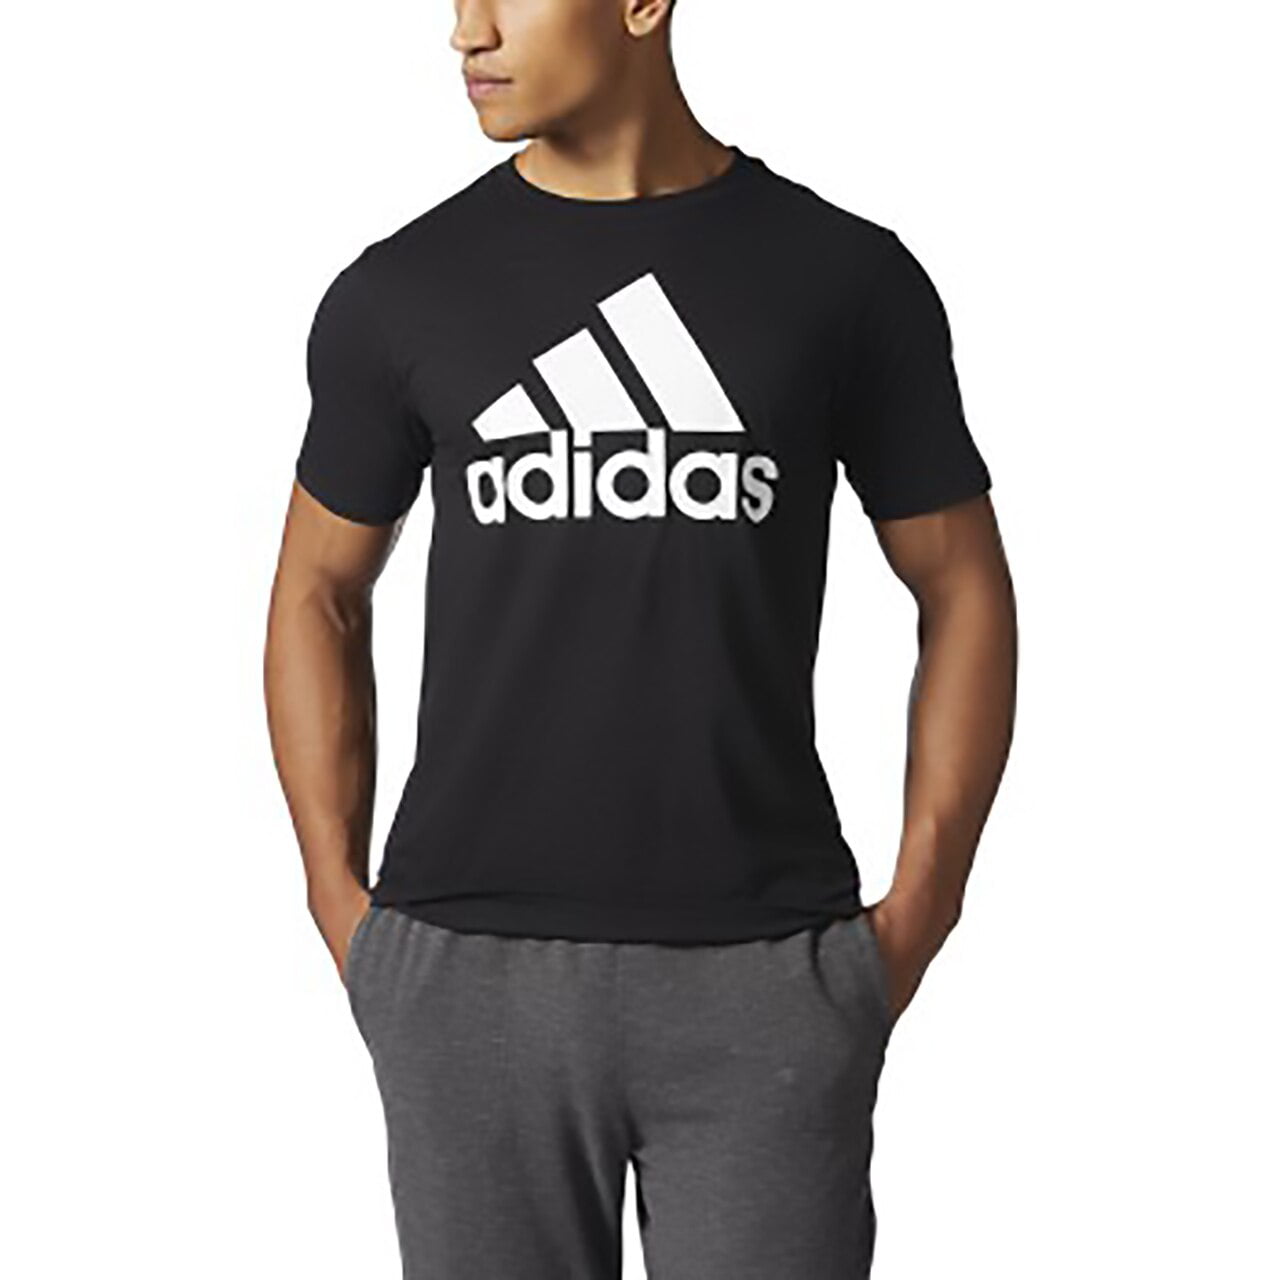 Adidas Badge of Sport Men's T-Shirt CD7936 - Black, White - Walmart.com